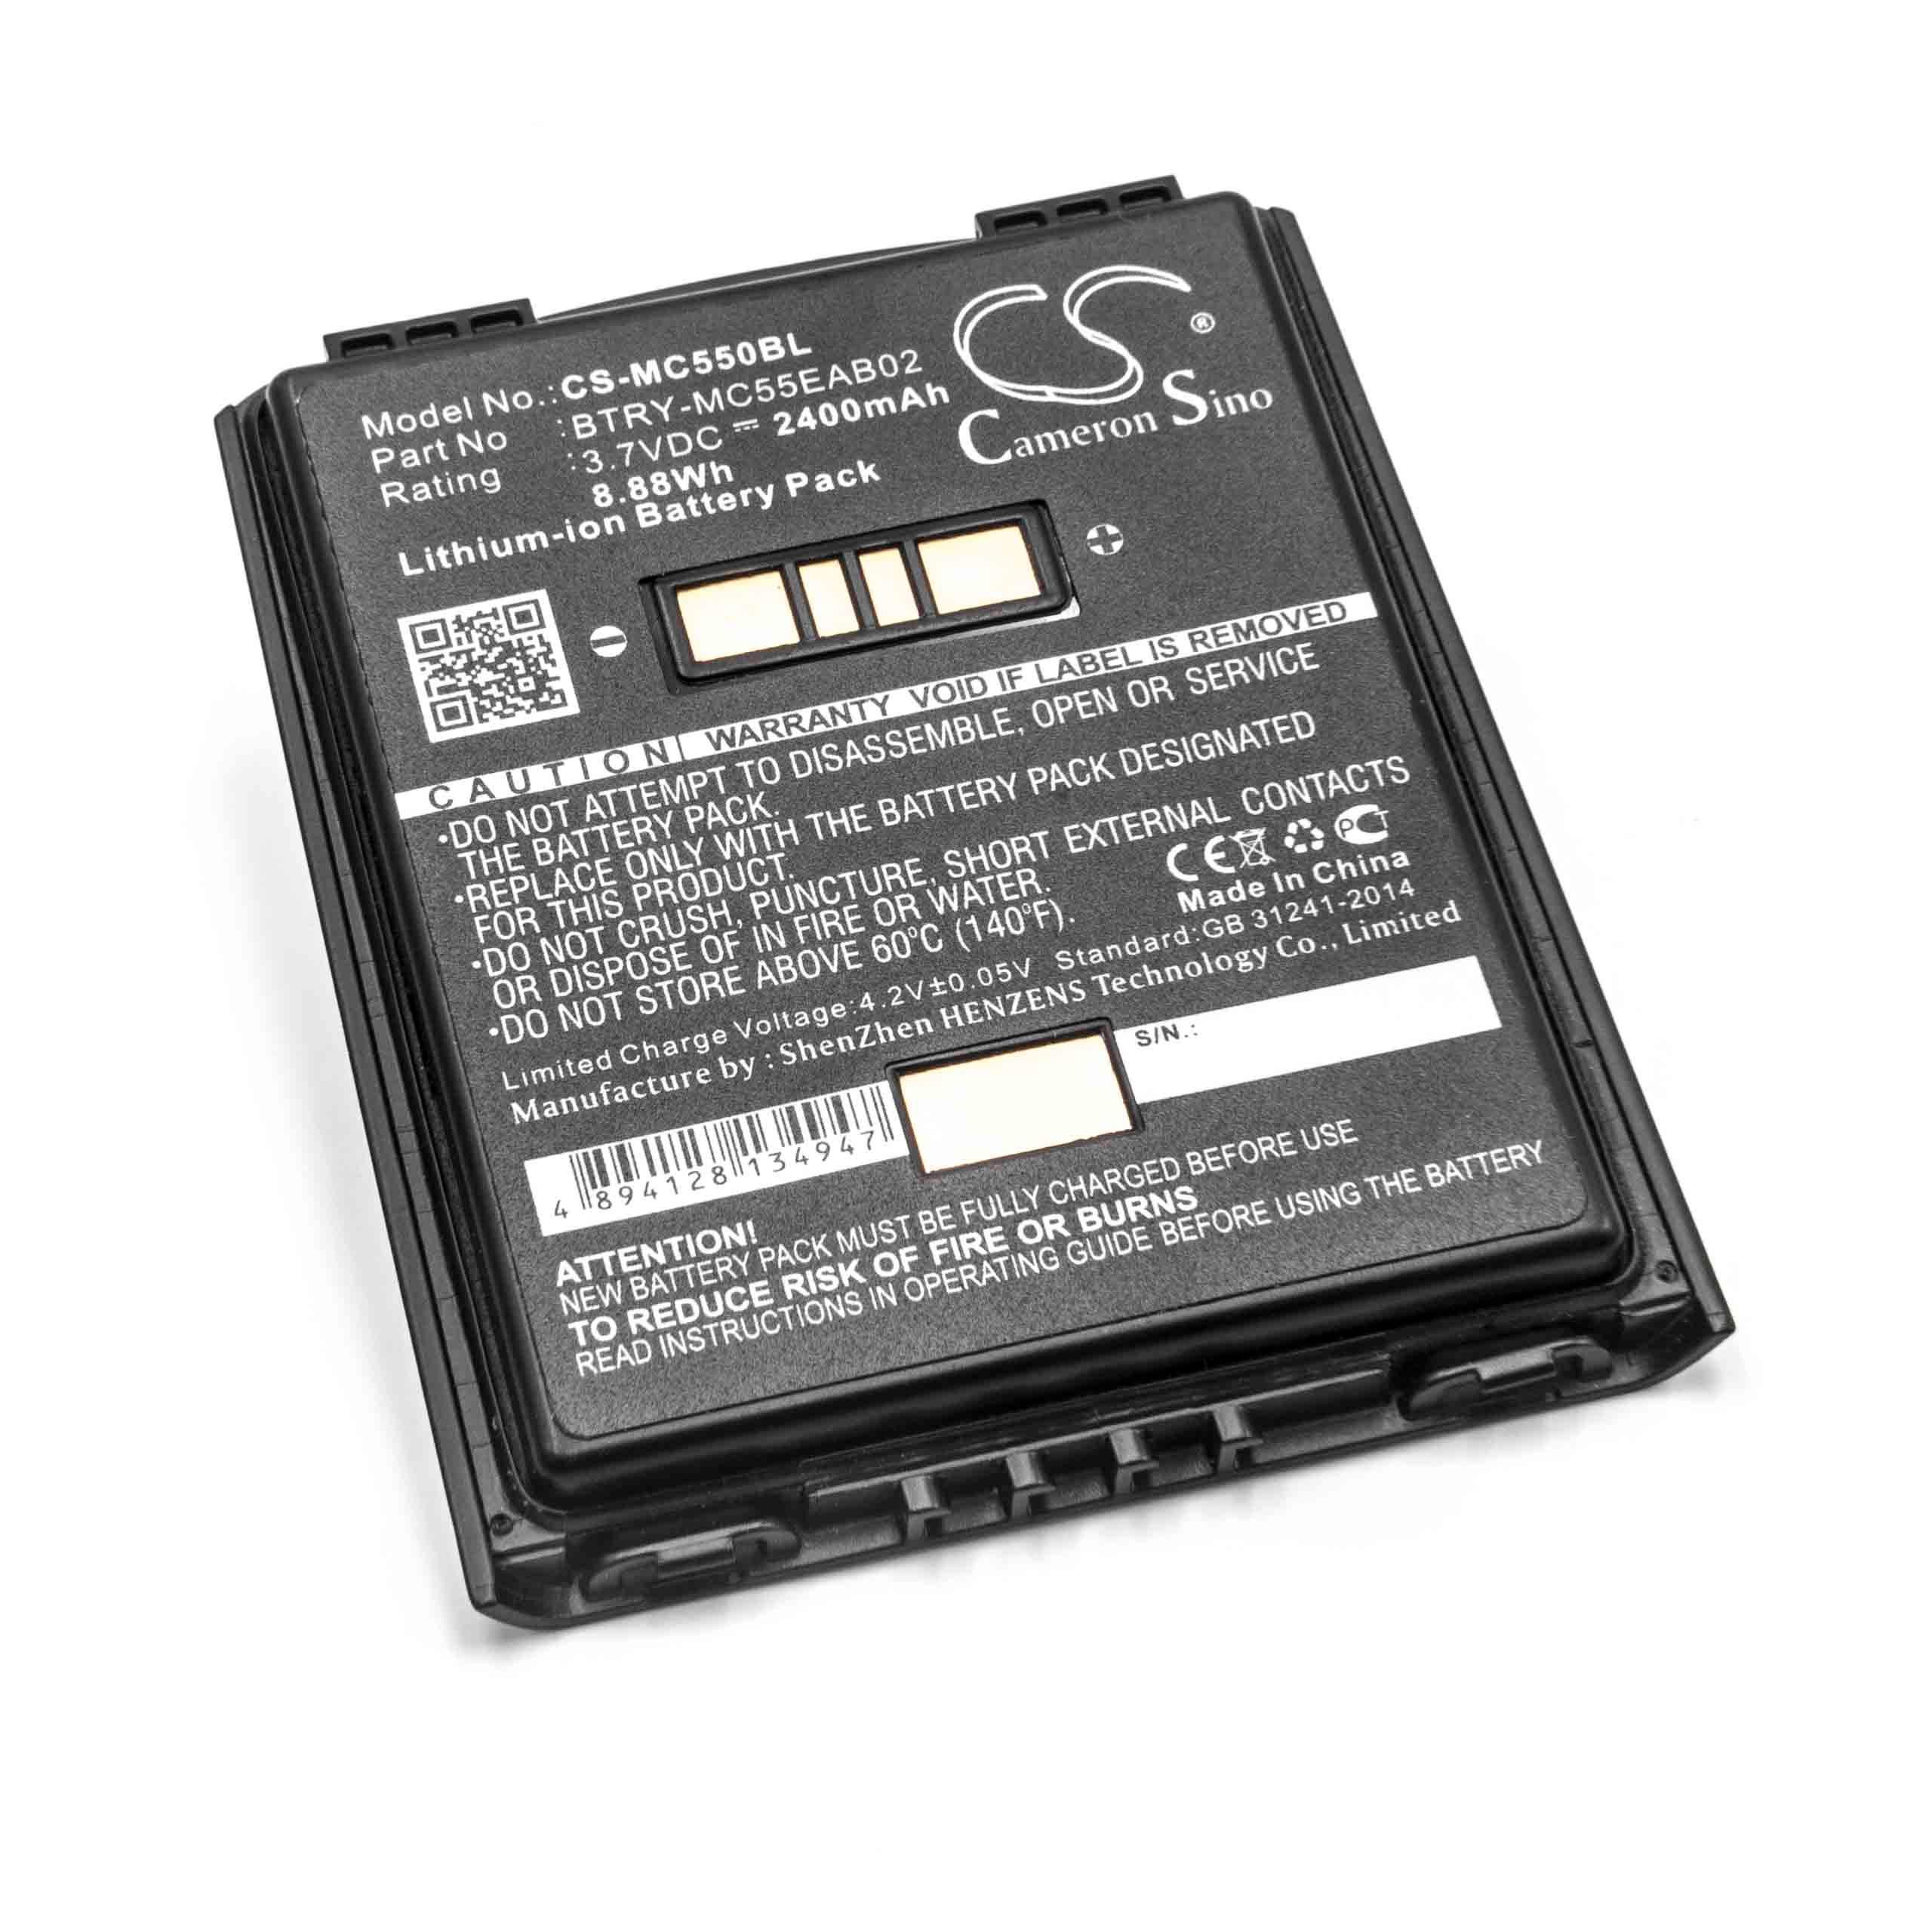 Mobilcomputer PDA-Akku als Ersatz für Symbol BTRY-MC55EAB02, 82-111094-01, U60493 - 2400mAh 3,7V Li-Ion